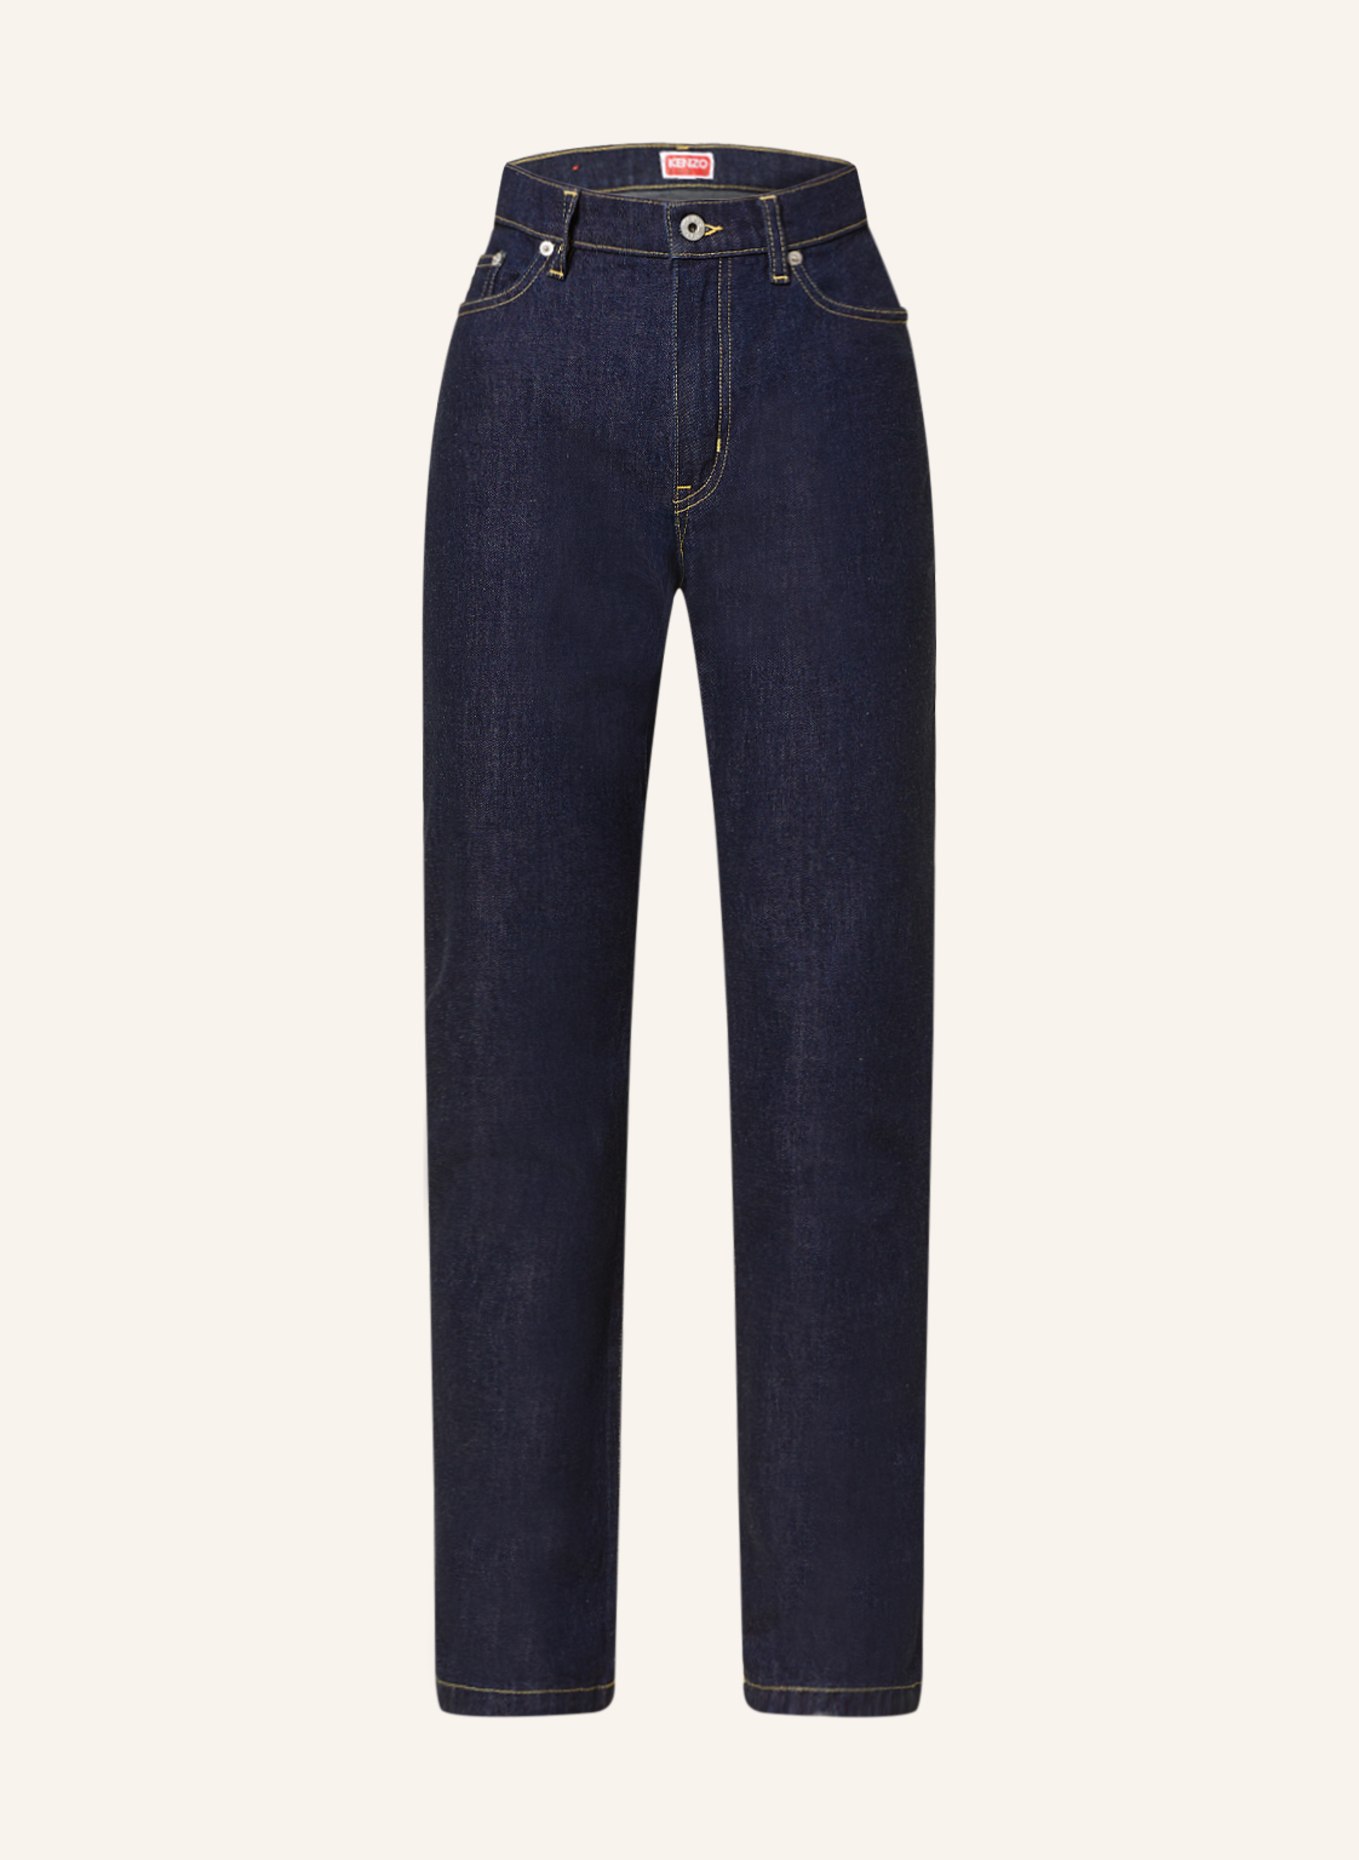 KENZO Straight Jeans ASAGAO, Farbe: DM RINSE BLUE DENIM (Bild 1)